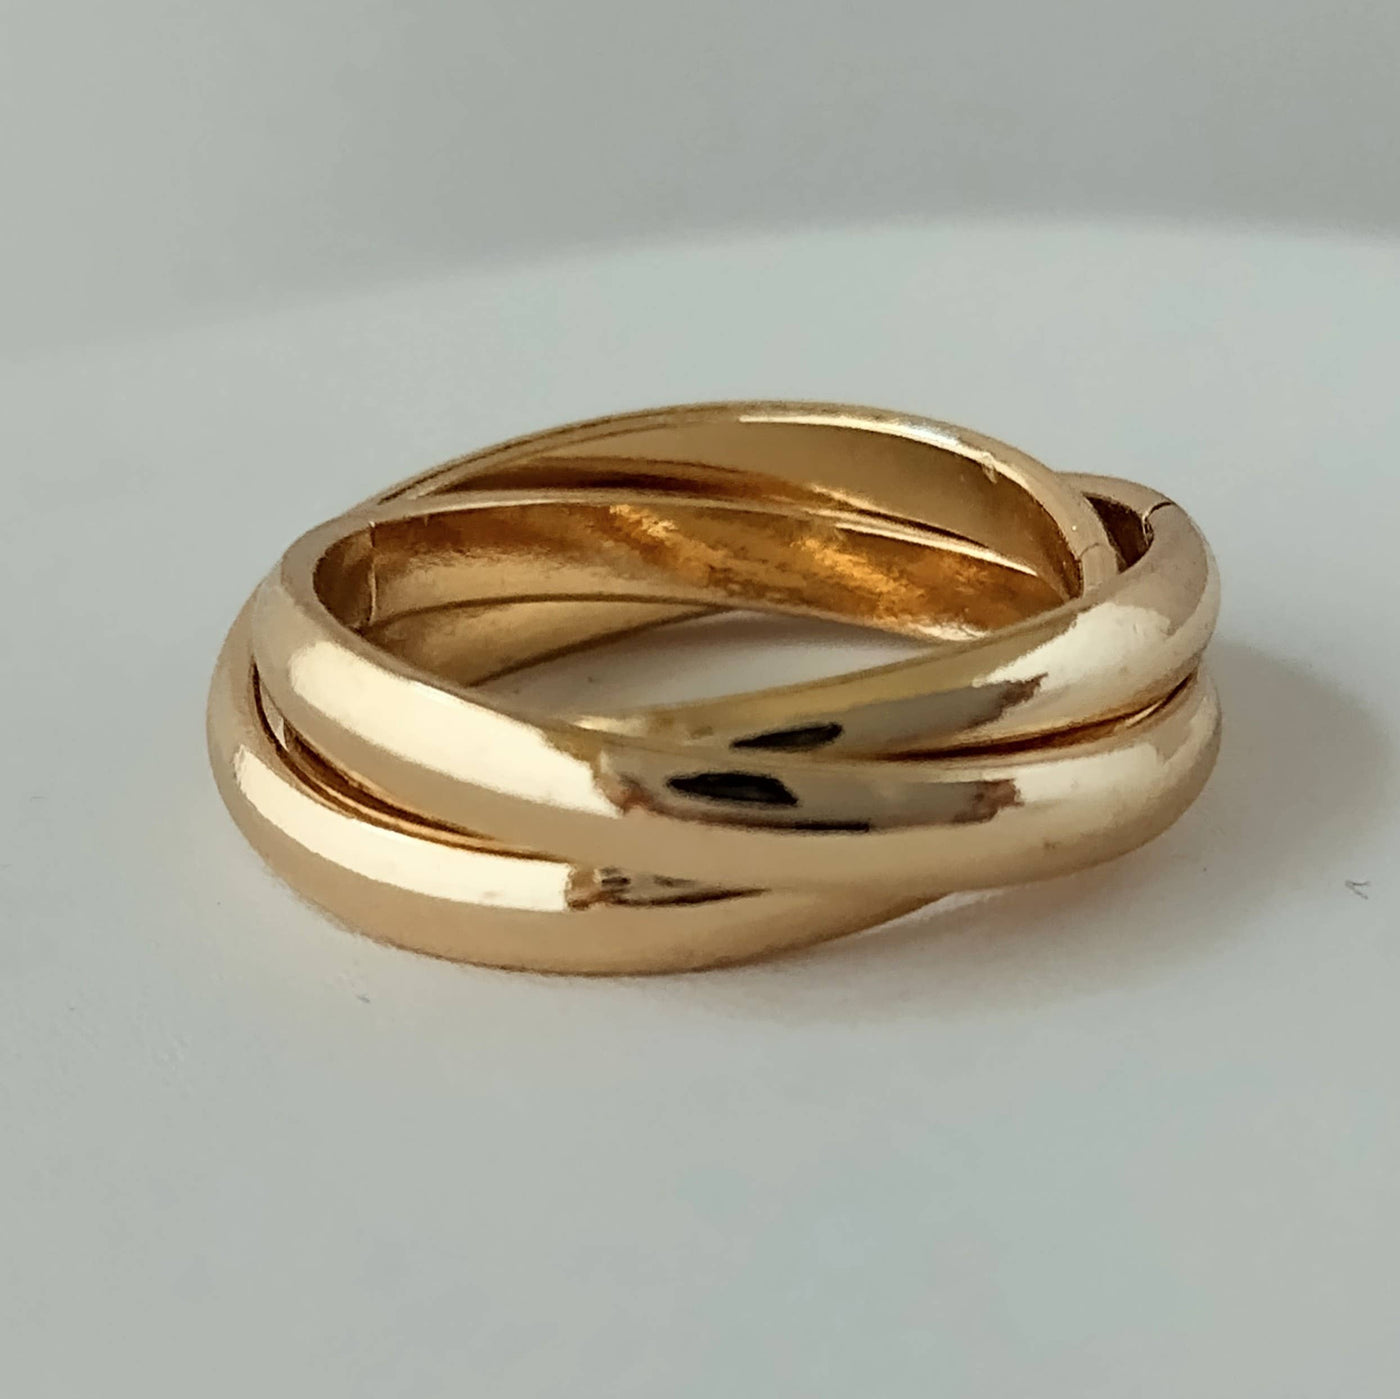 Gold Interlocking Ring, Fidget Ring